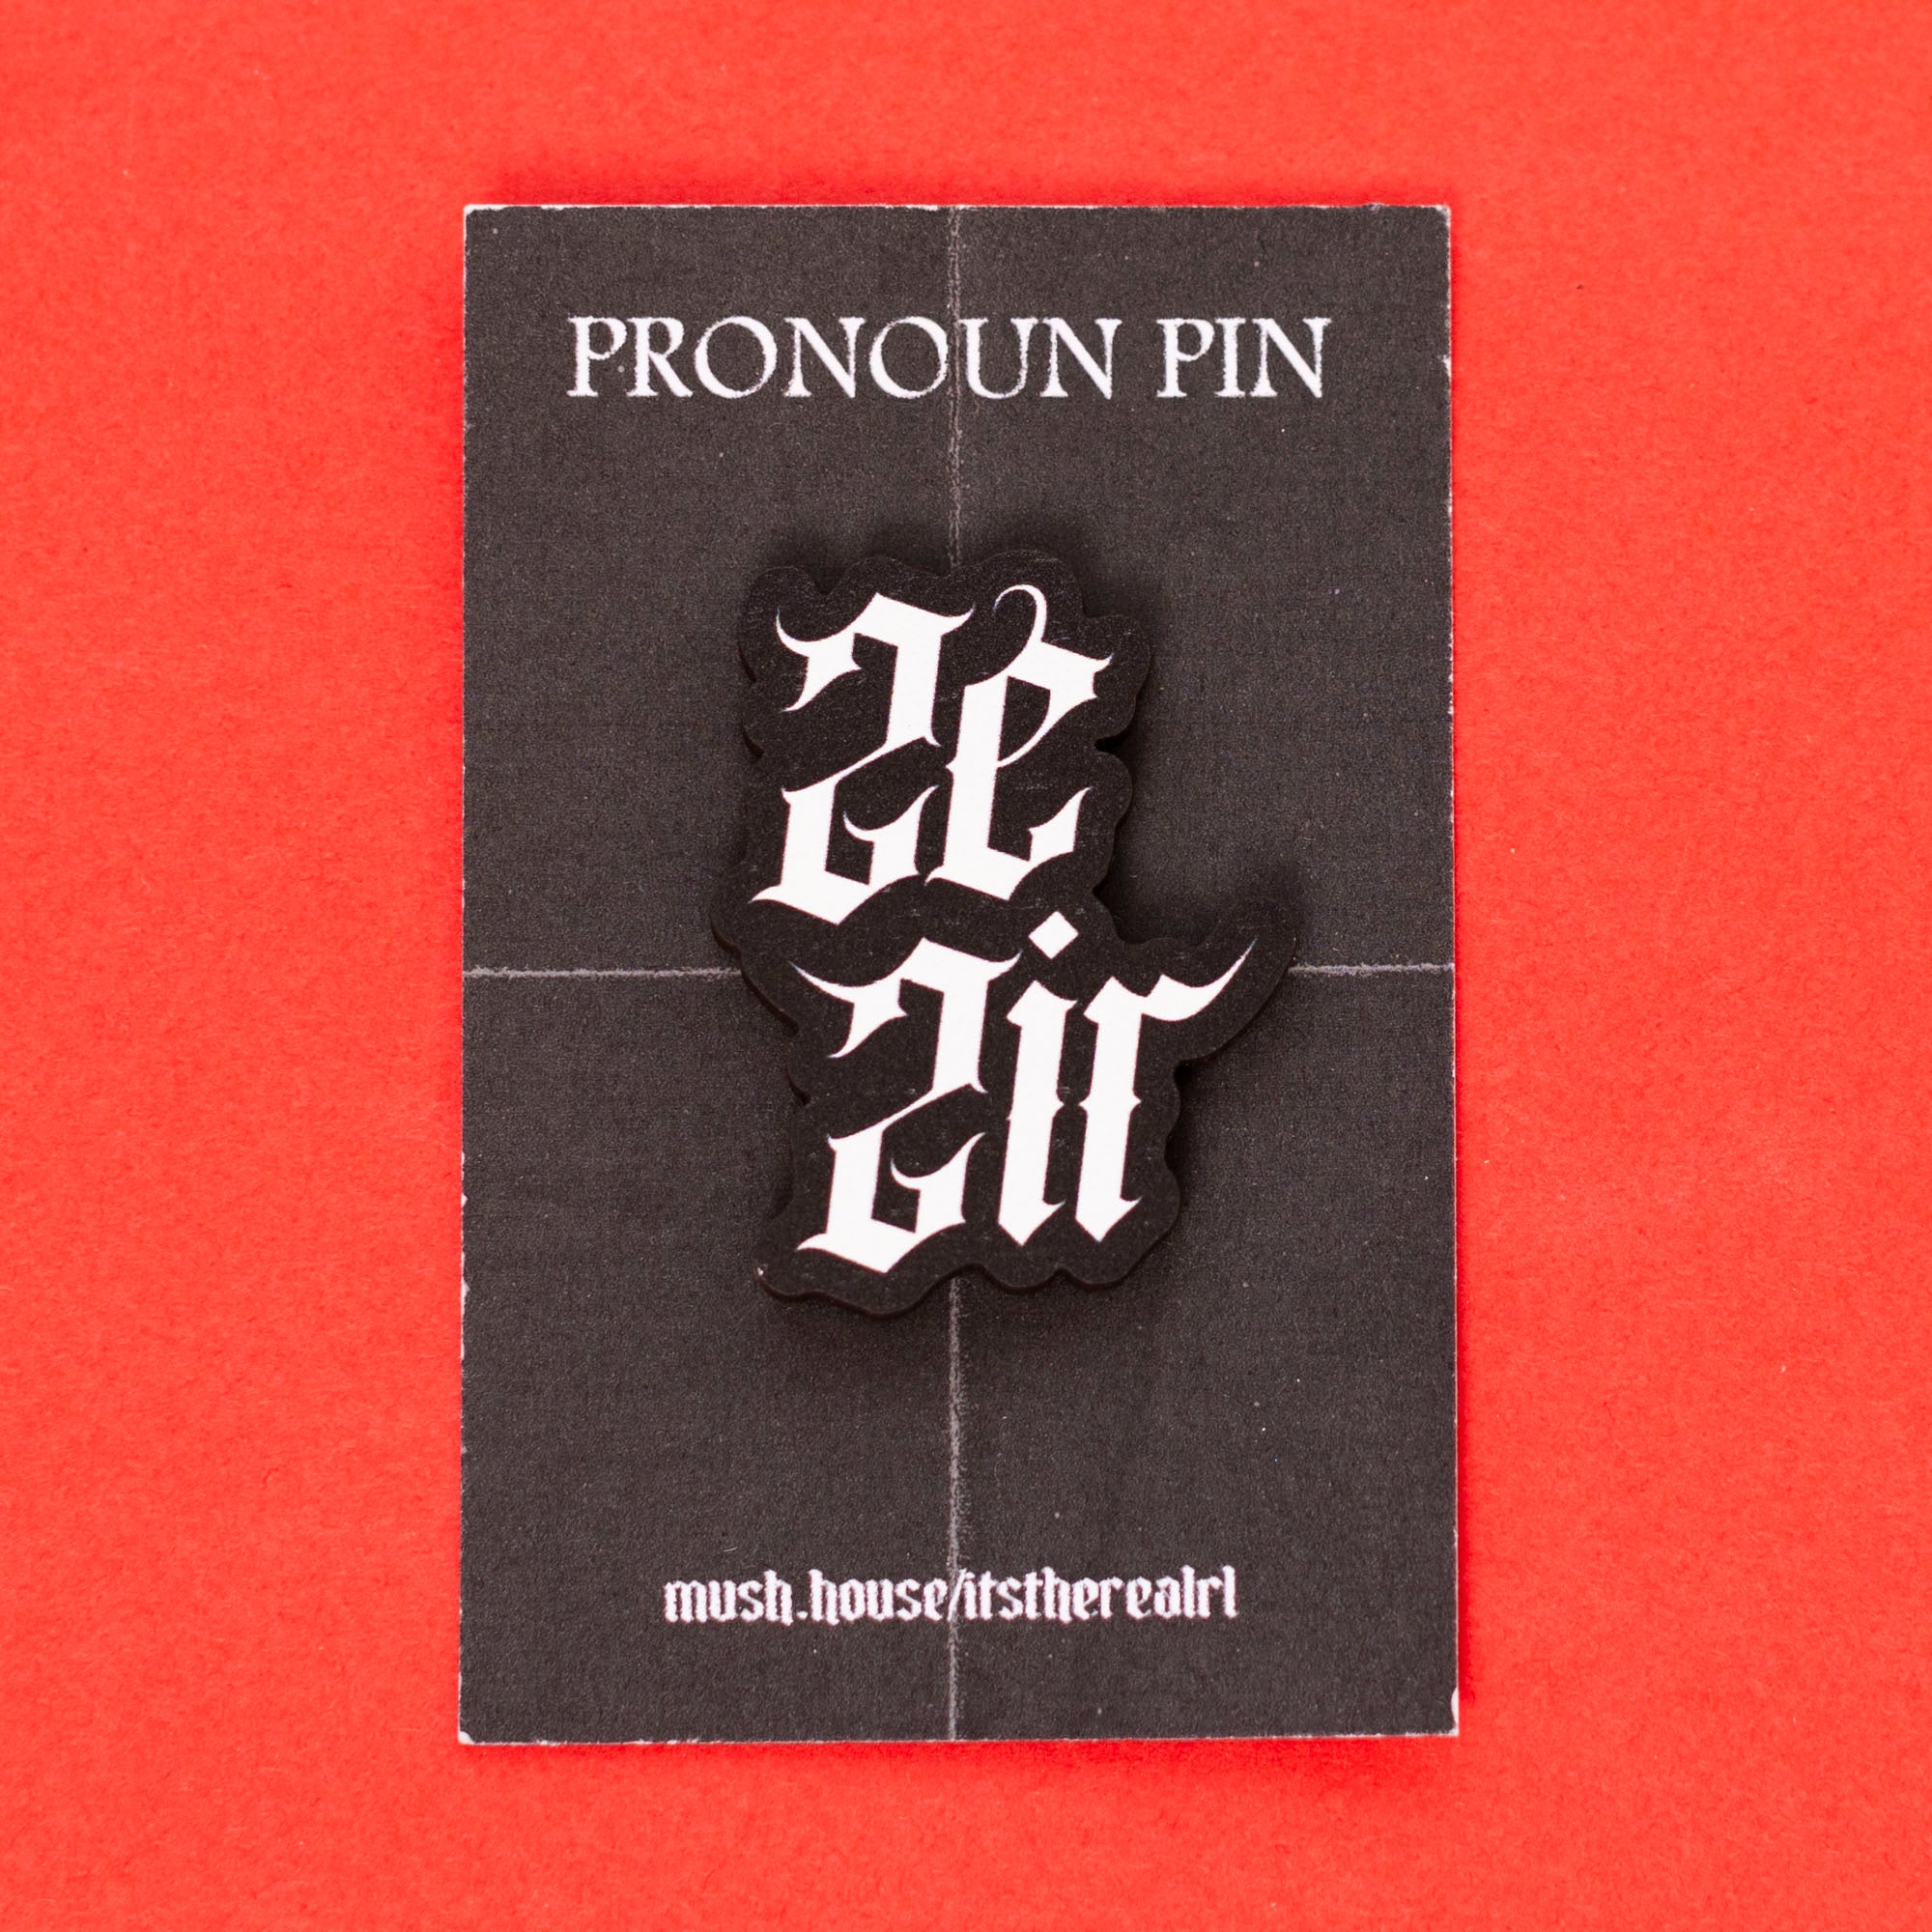 Ze / Zir Gothic Pronoun Pin